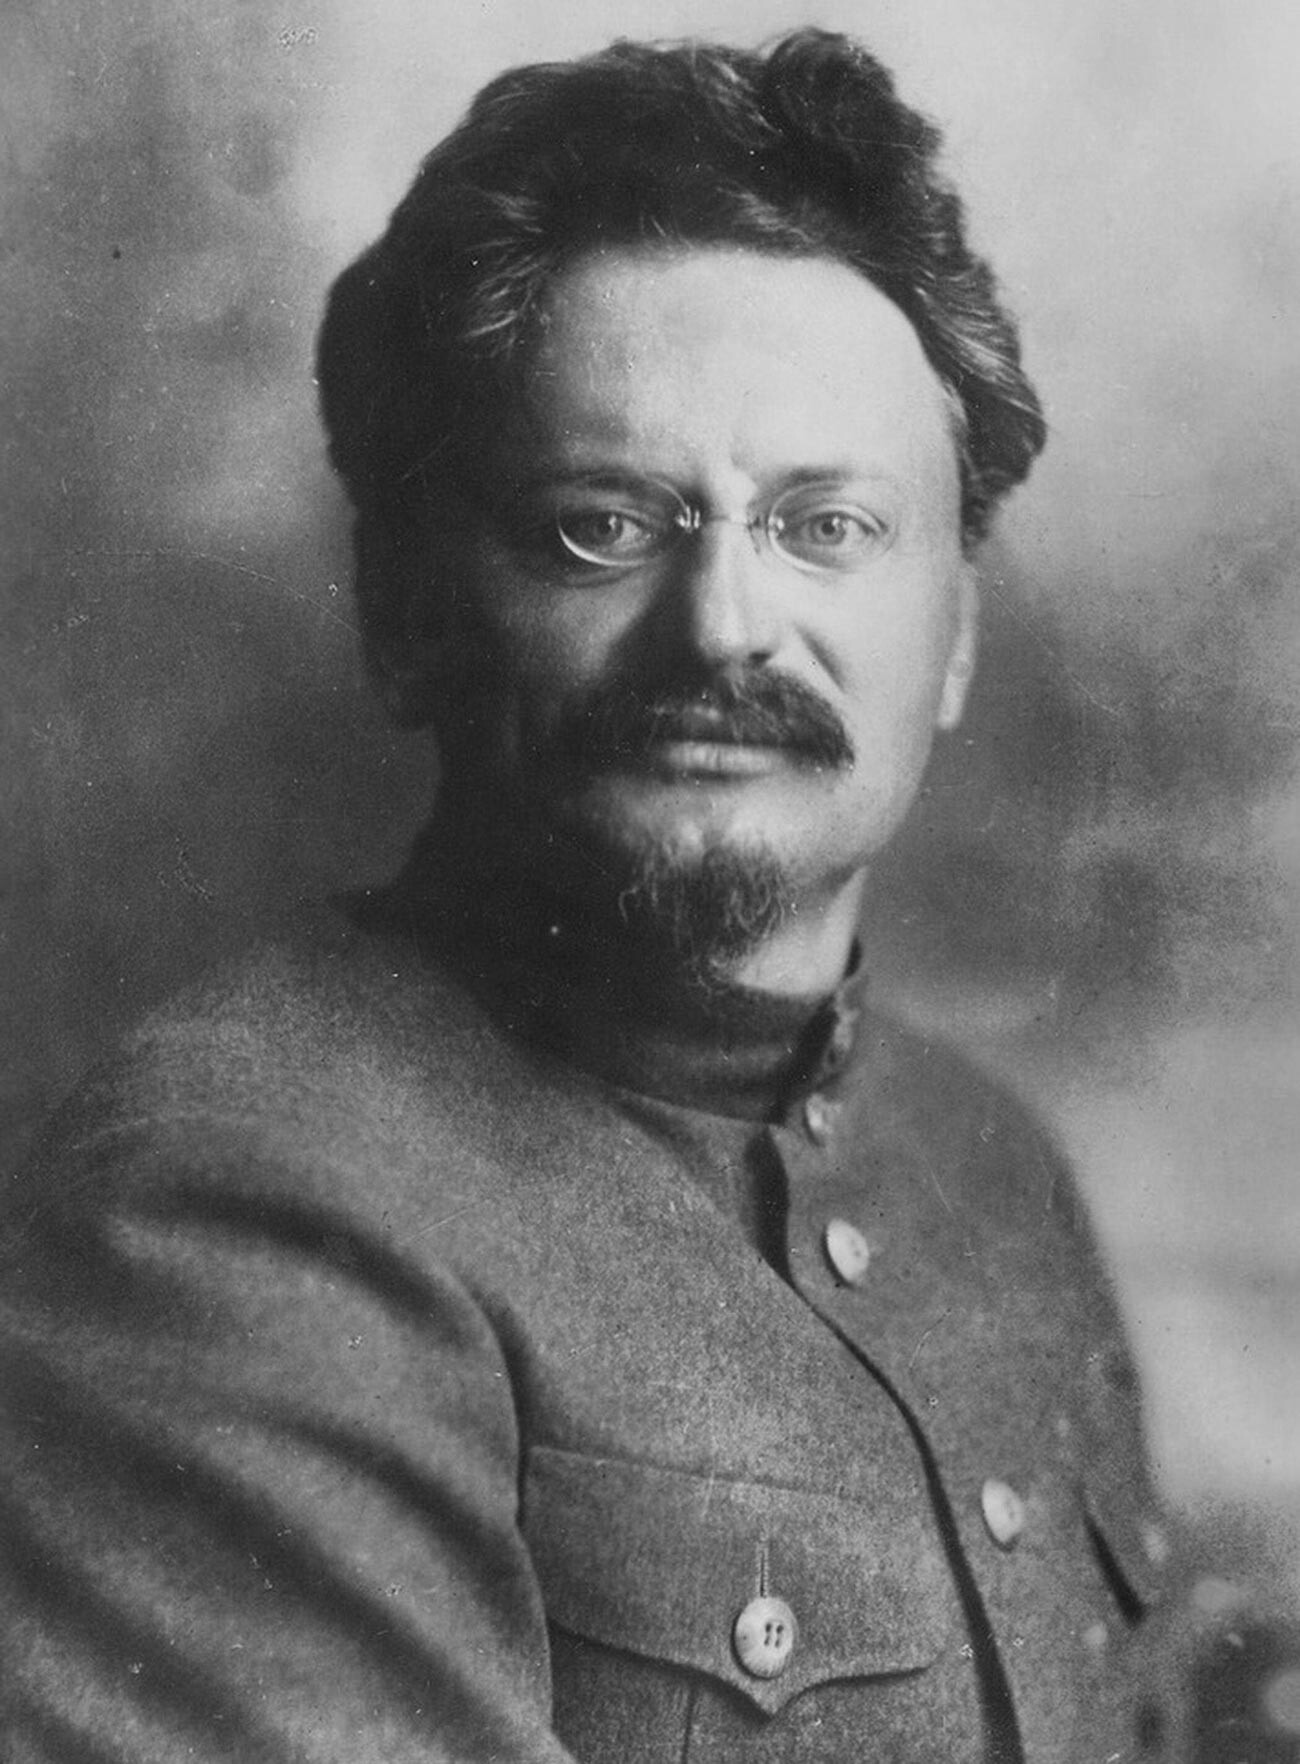 Lev Trotskij